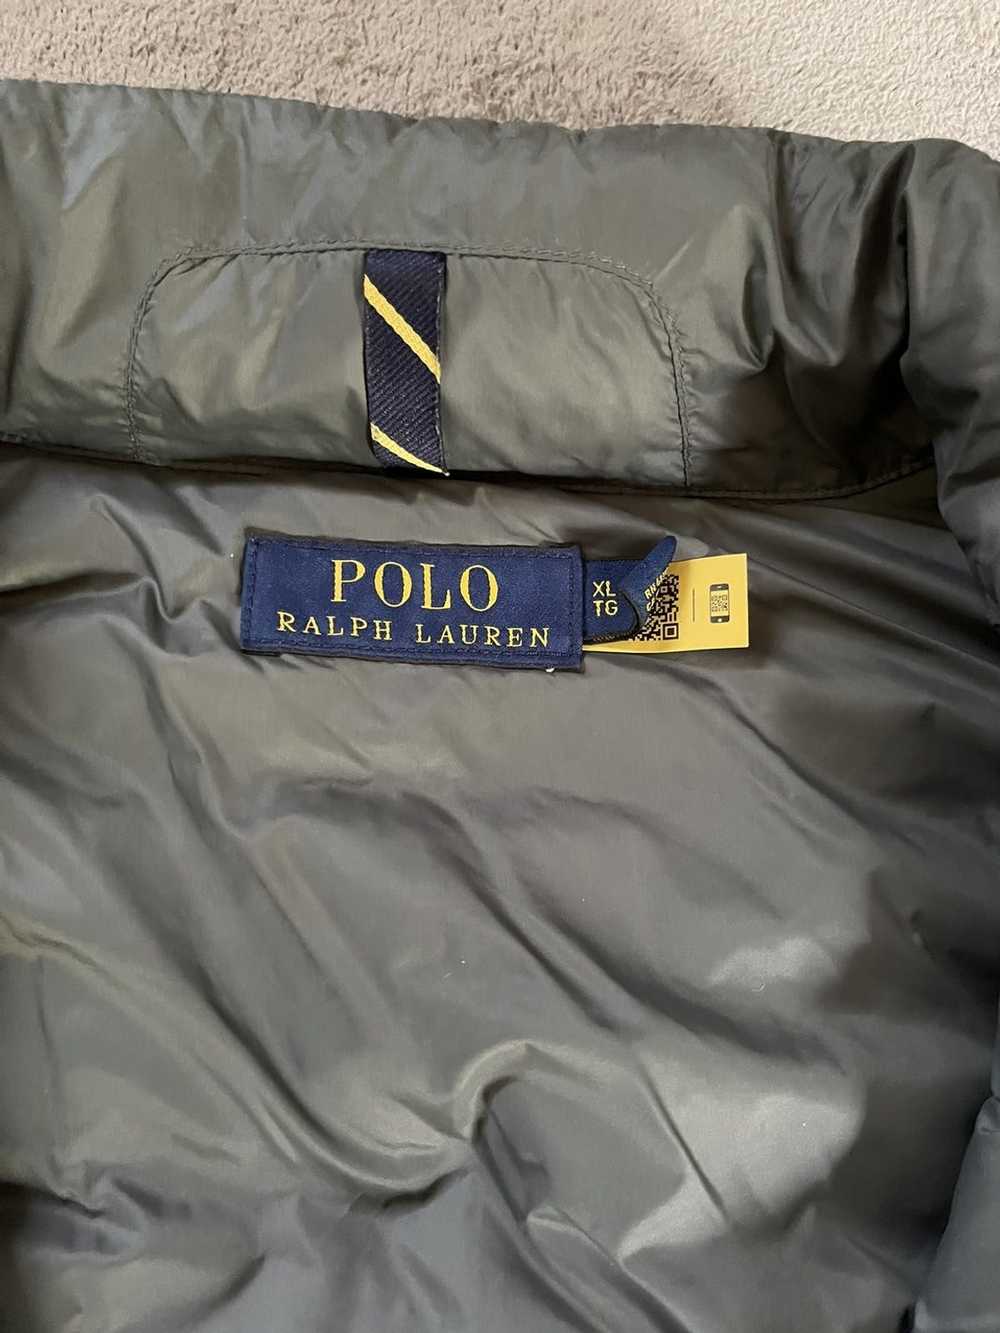 Polo Ralph Lauren Polo Ralph Lauren Vest - image 3